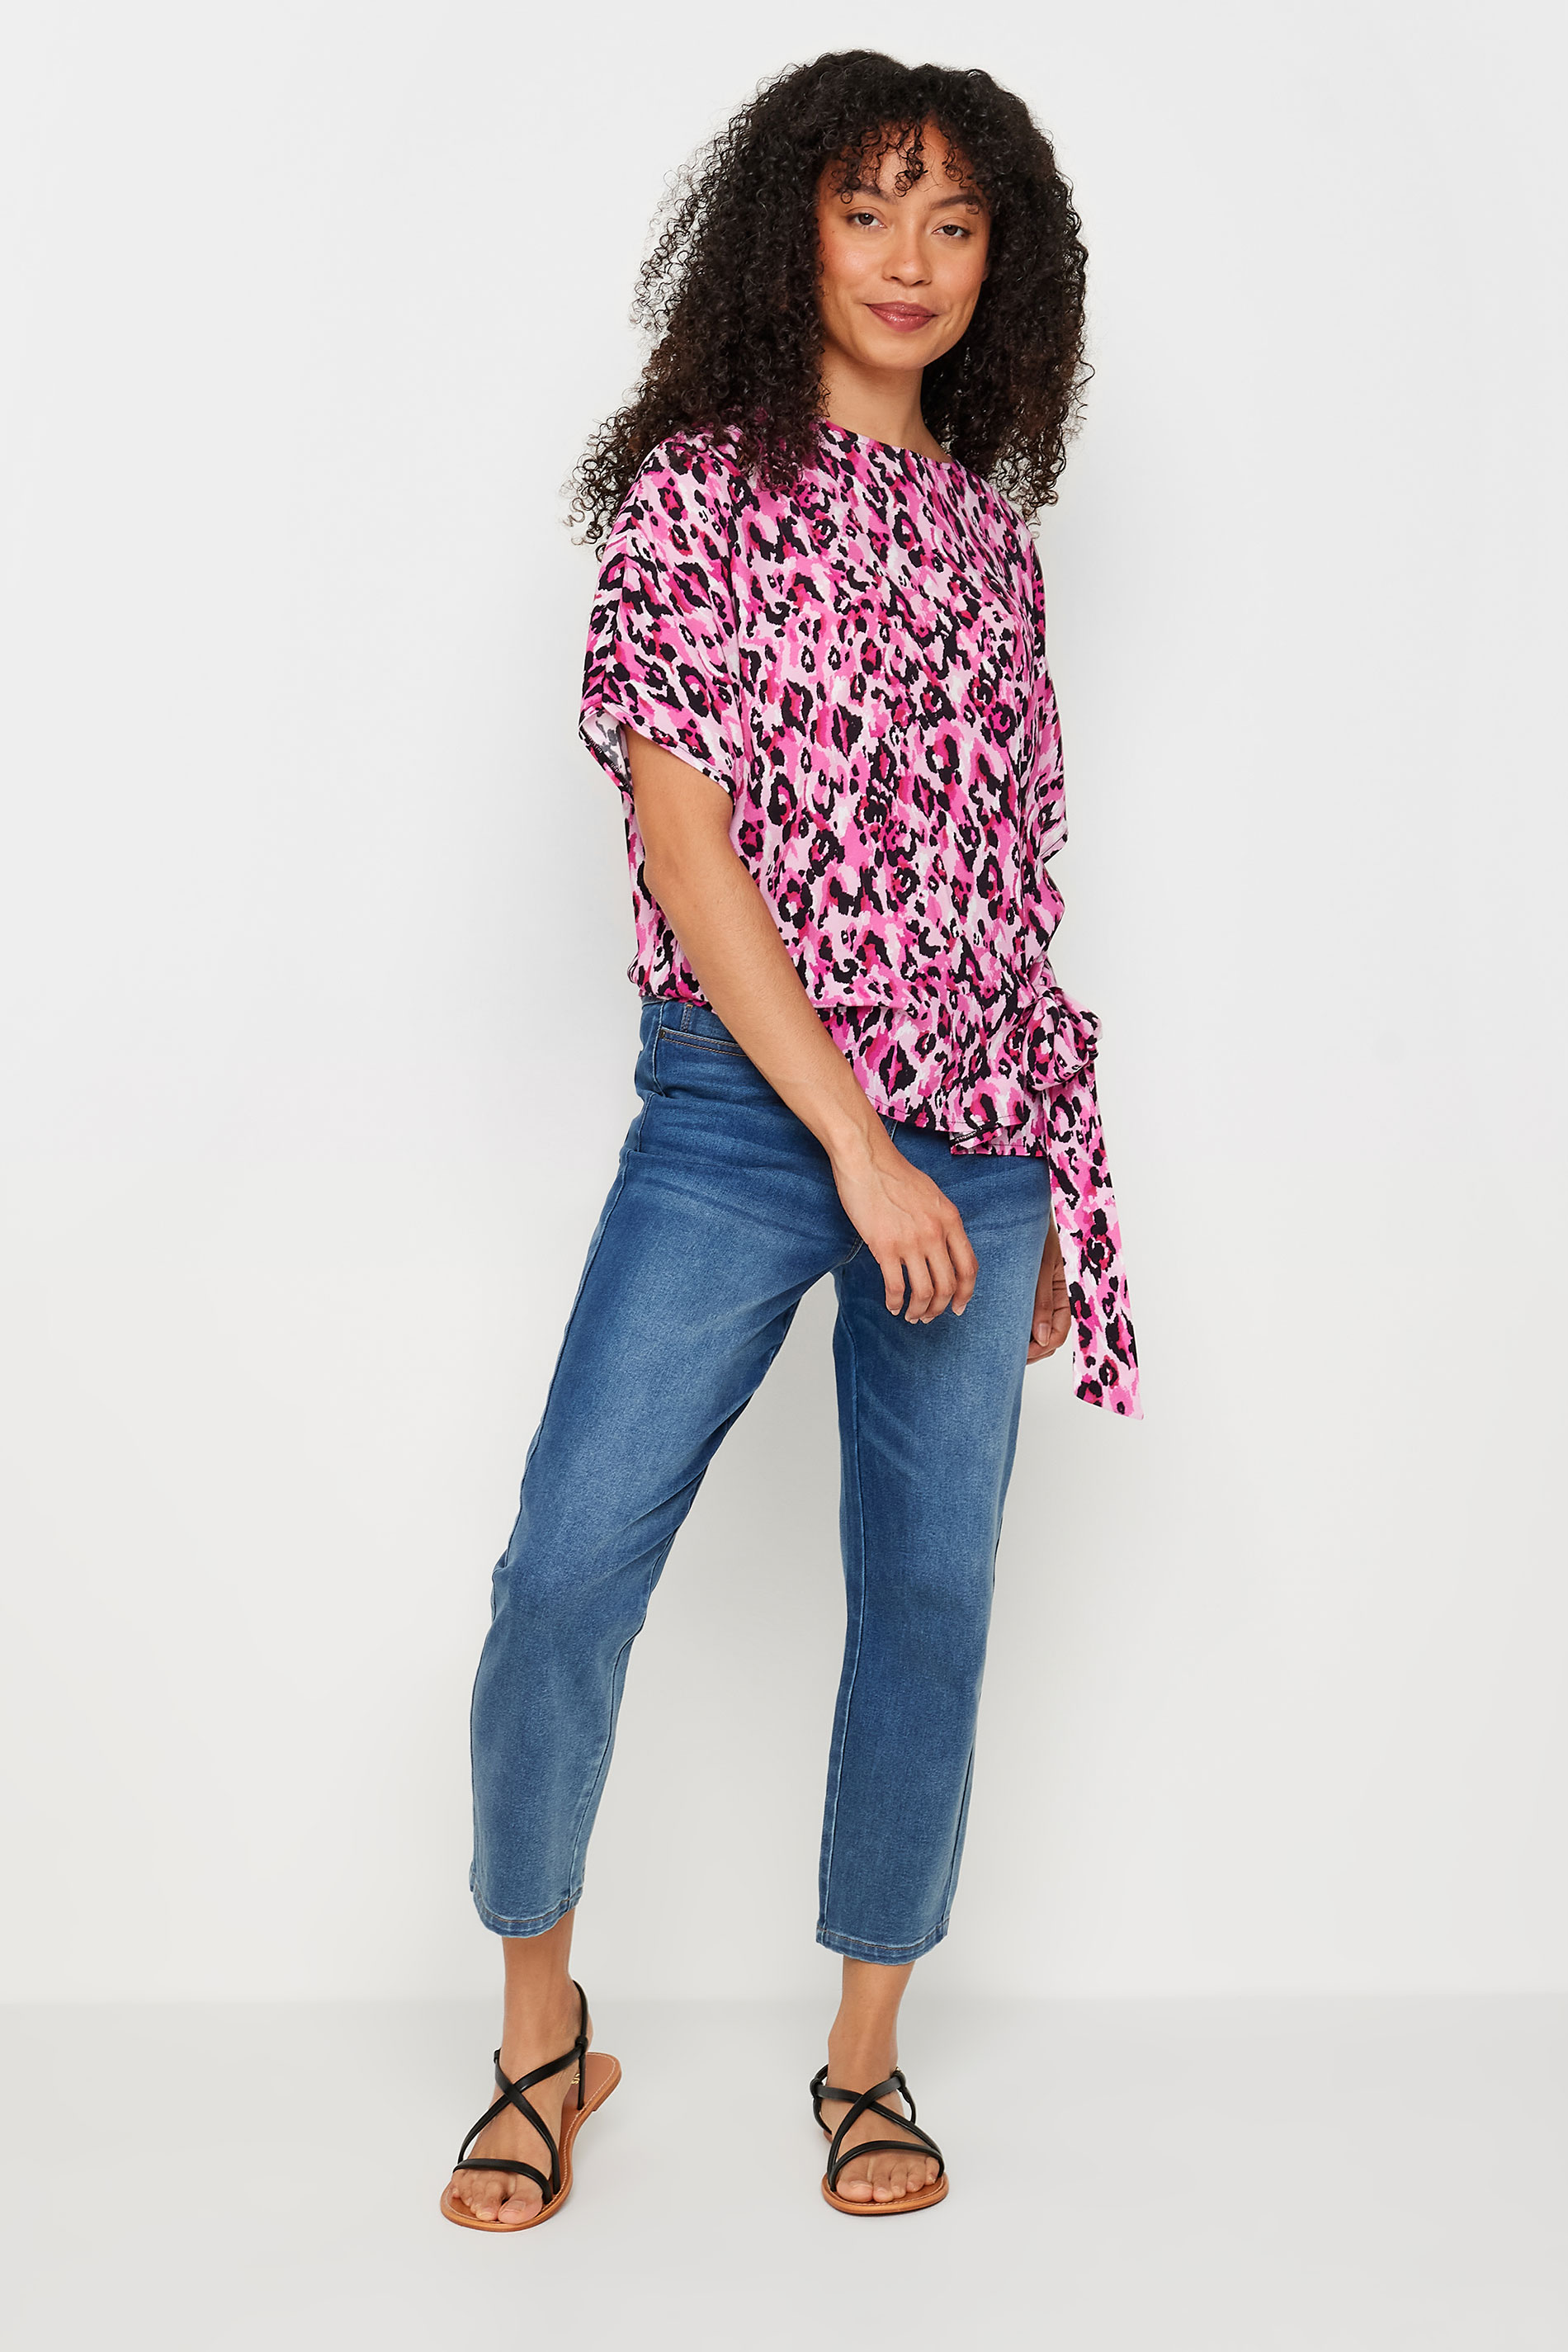 M&Co Pink Leopard Print Tie Side Detail Blouse | M&Co 2